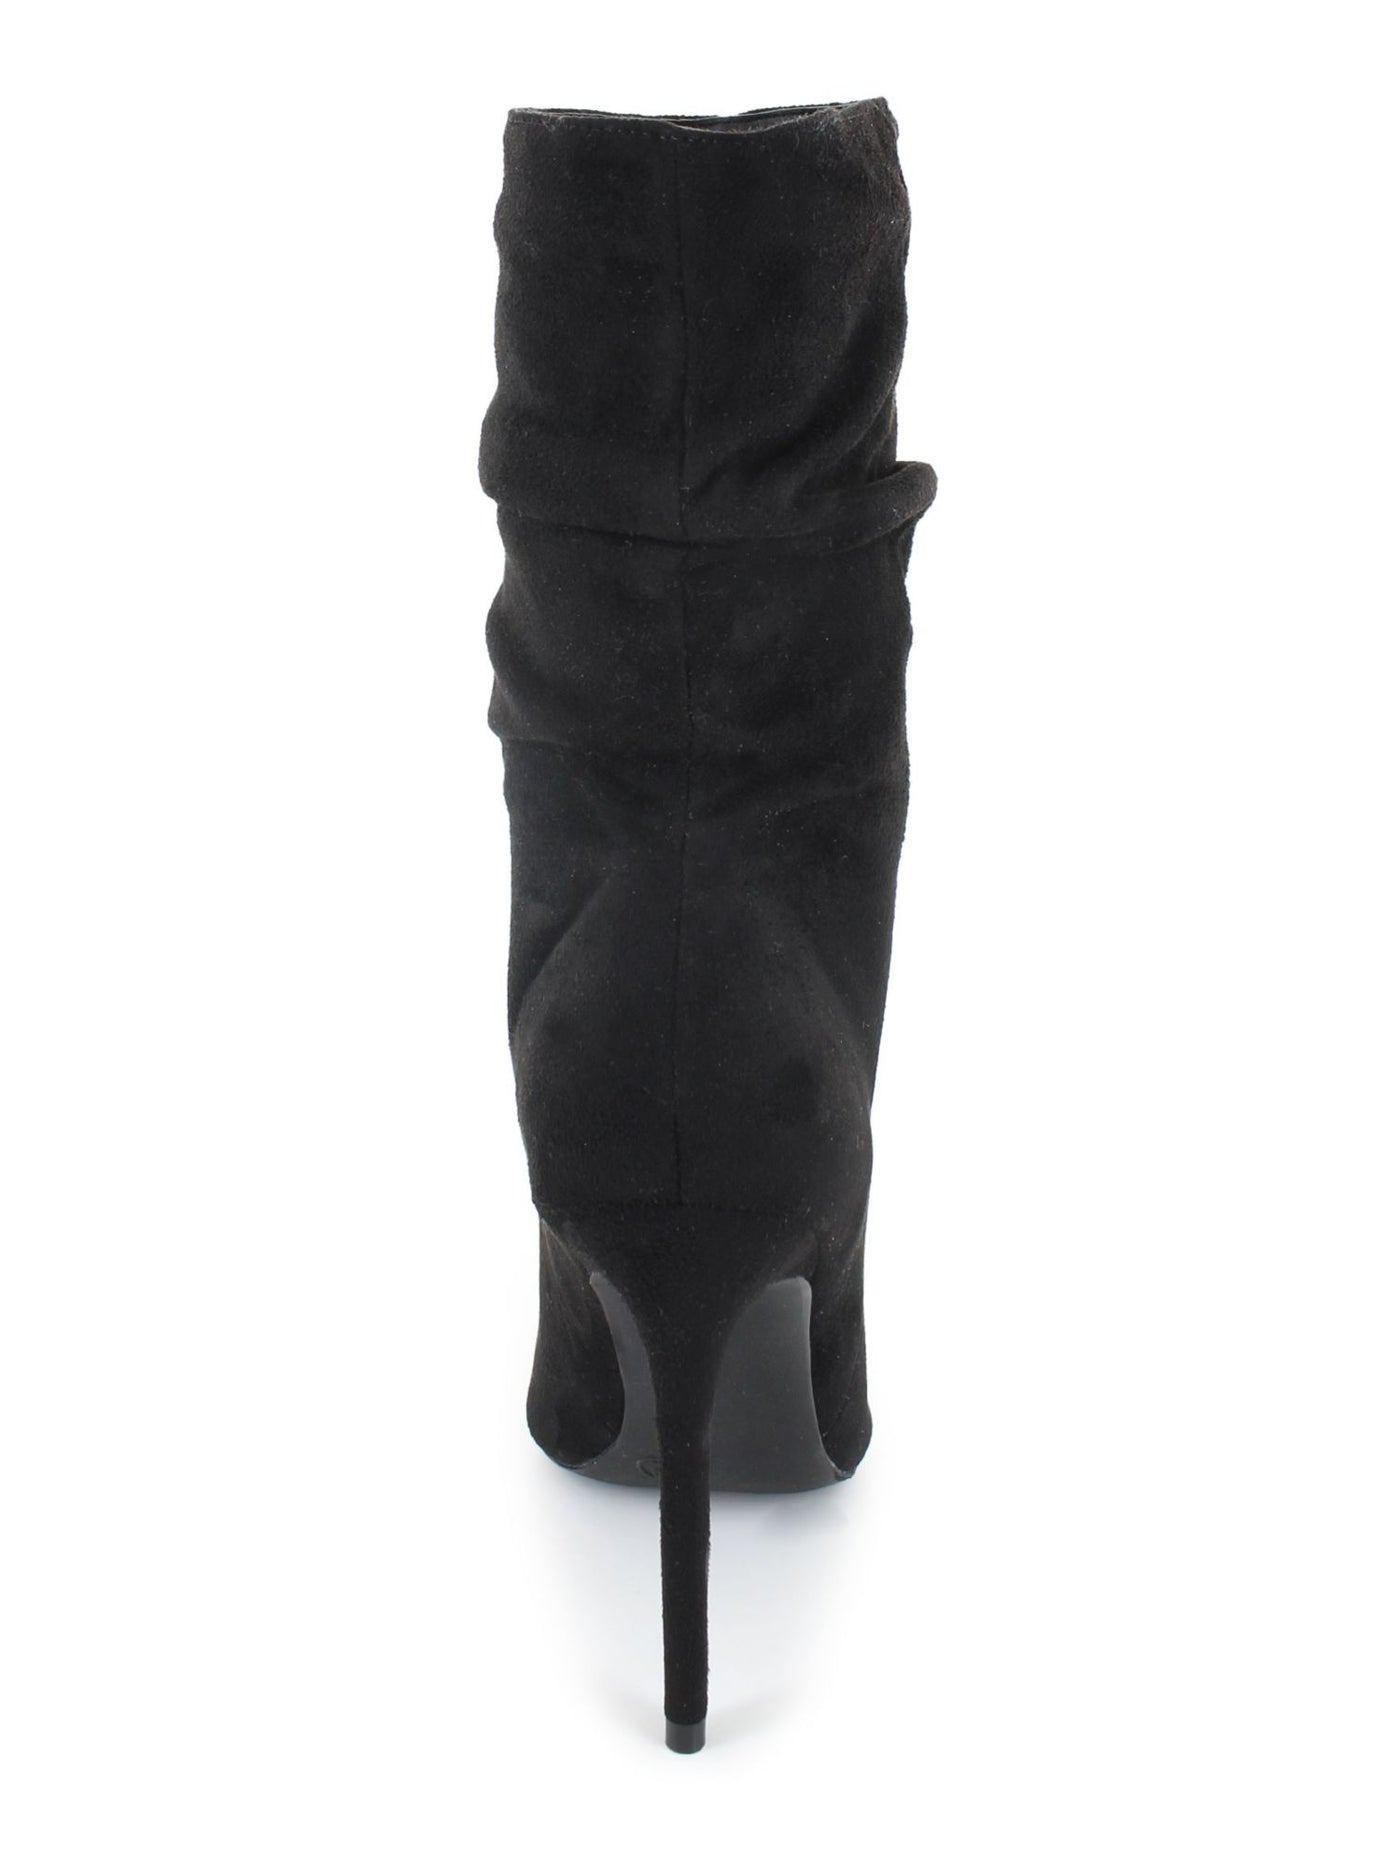 XOXO Womens Black Genevie Pointed Toe Stiletto Dress Slouch Boot 10 M